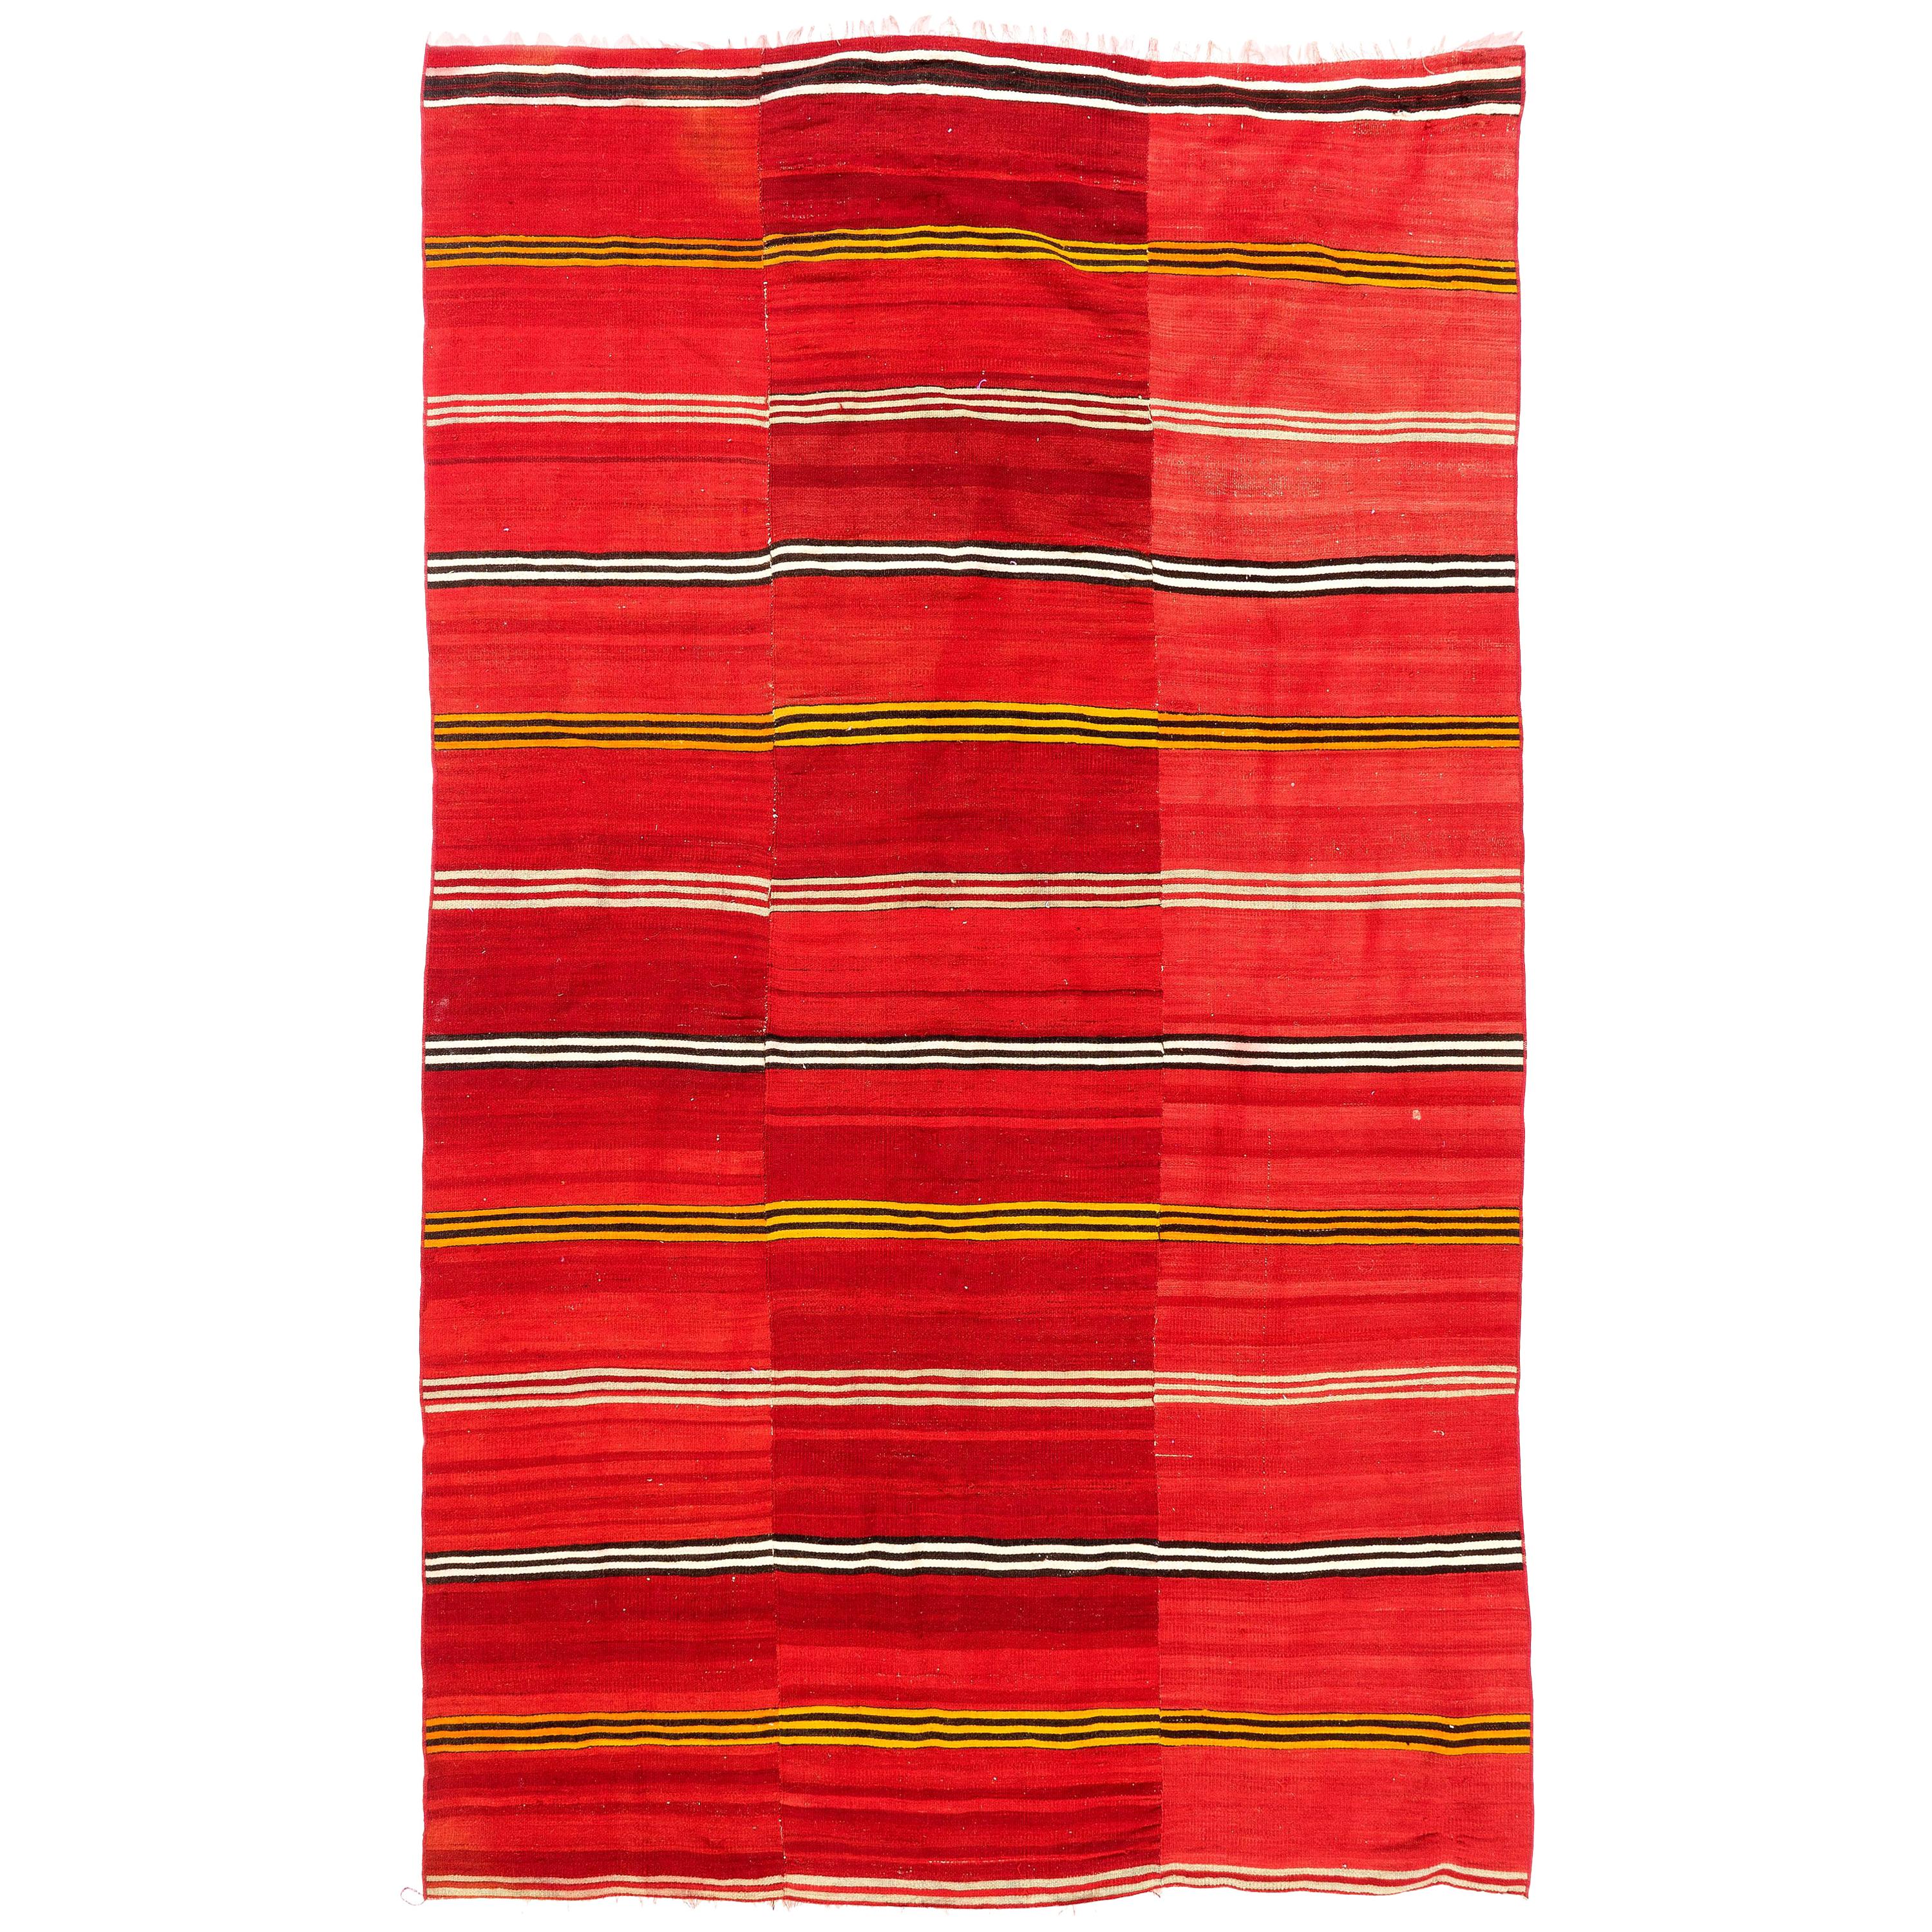 5x8.4 Ft Vintage Handmade Striped Nomadic Kilim Rug in Vivid Red Color, All Wool For Sale